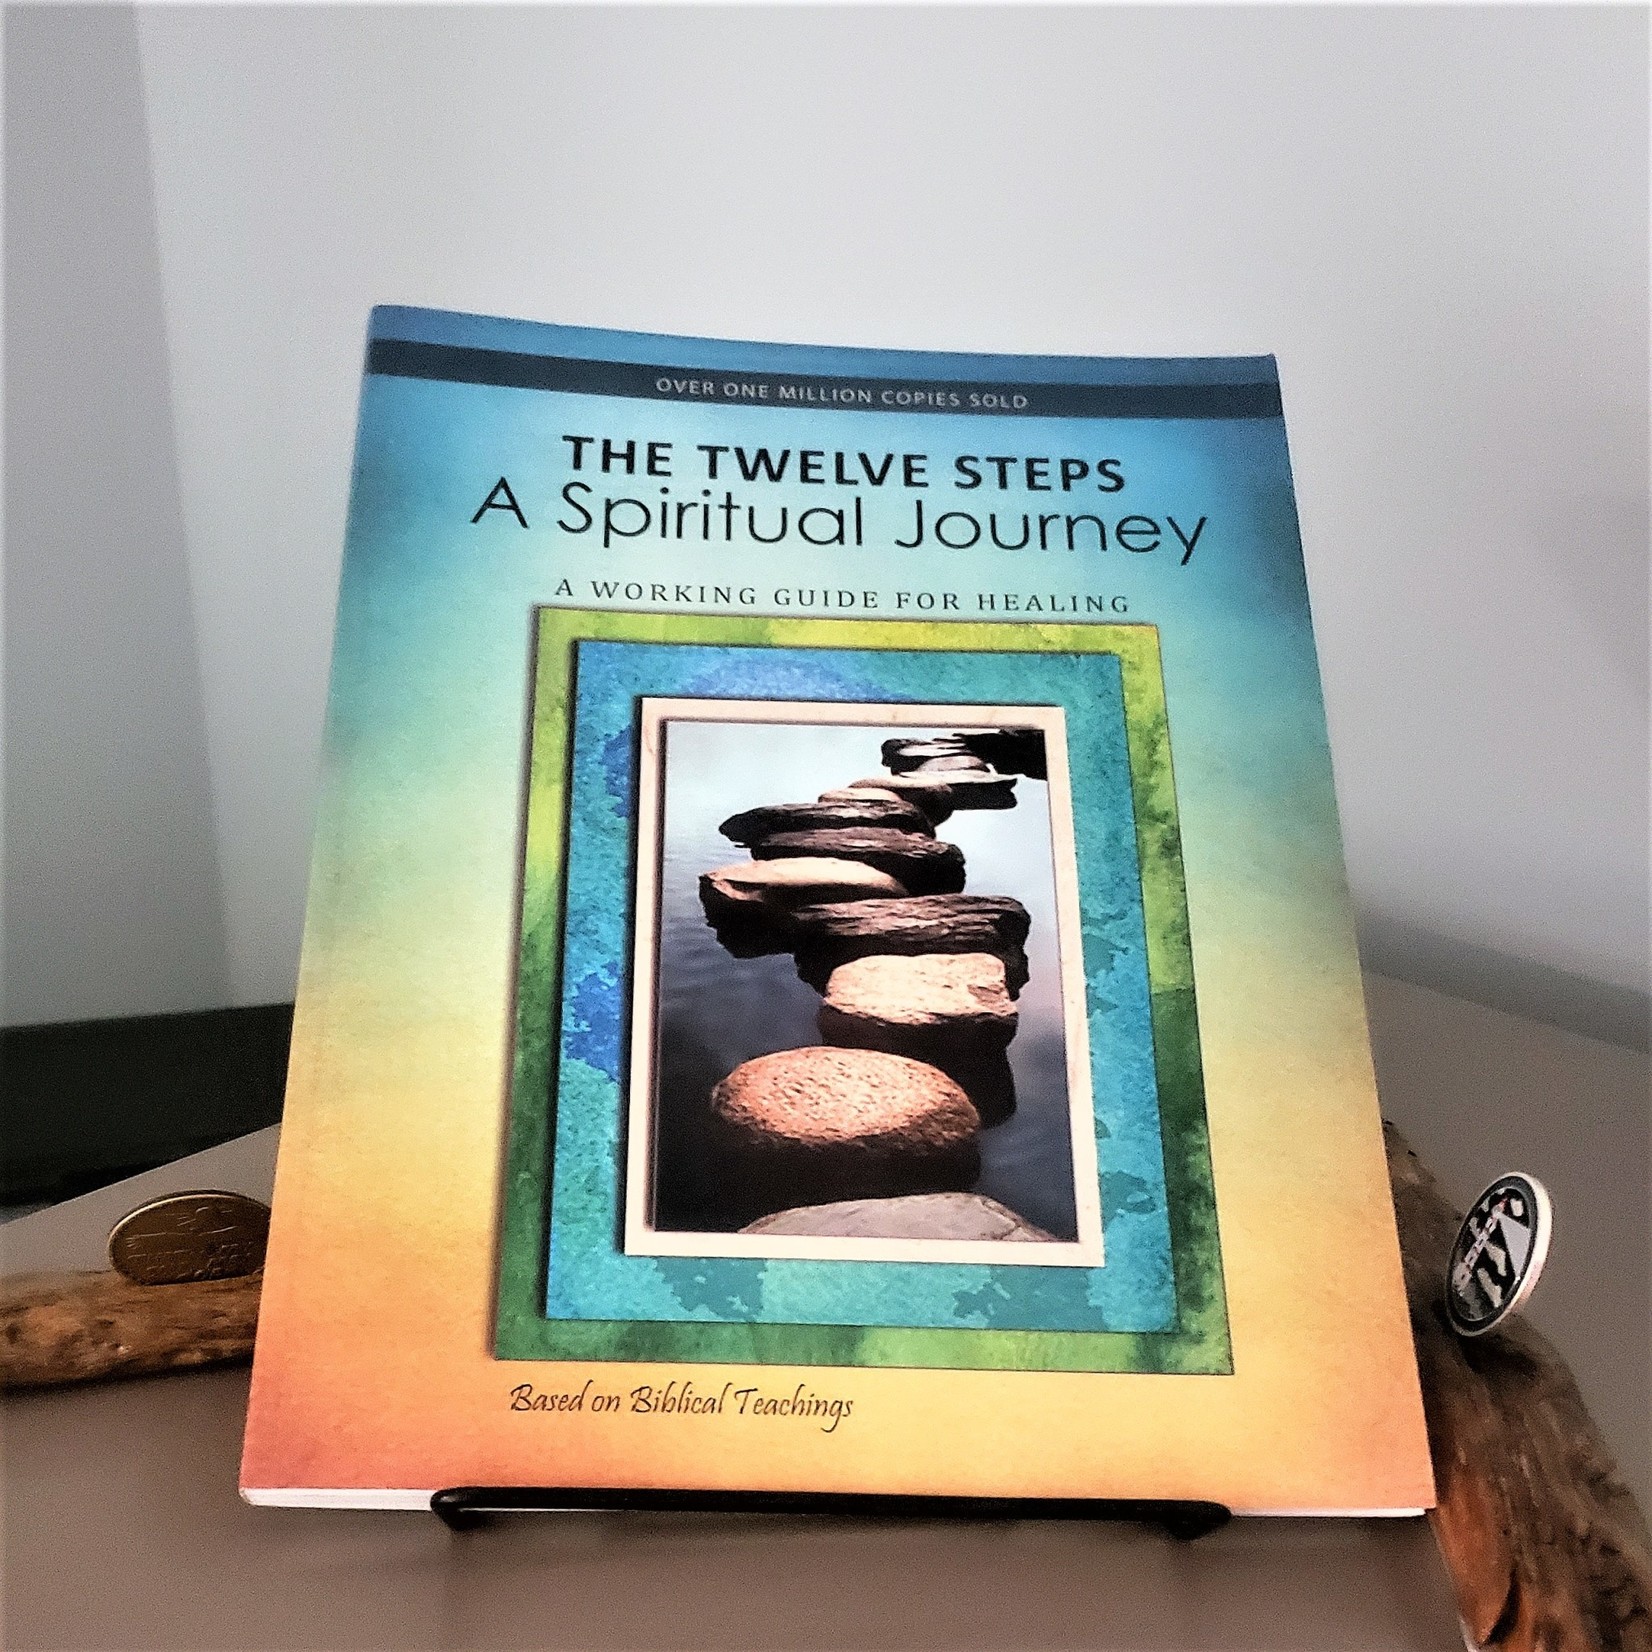 The Twelve Steps (A Spiritual Journey)